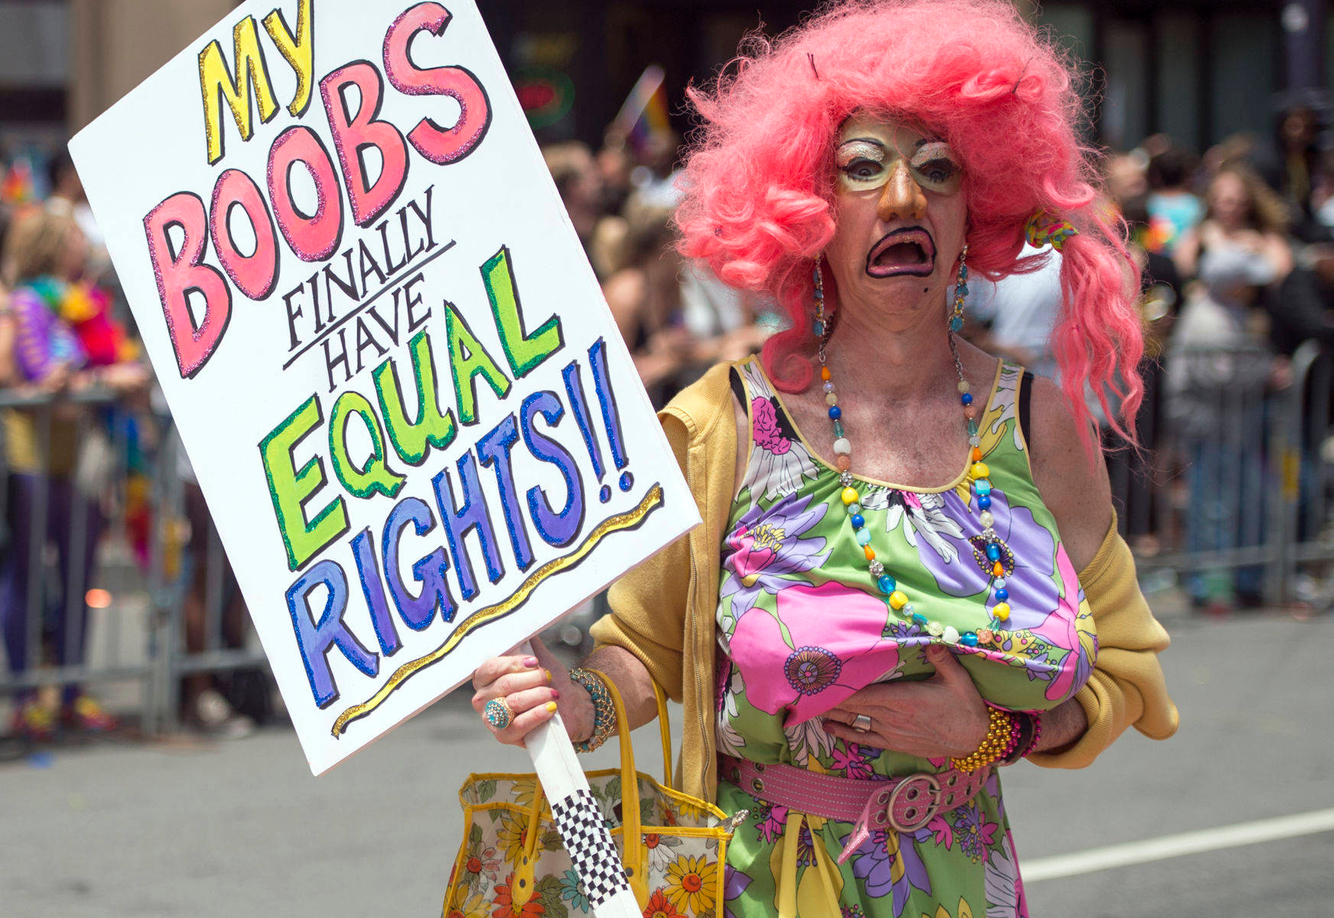 GAY RIGHTS: A man marches in a gay pride parade